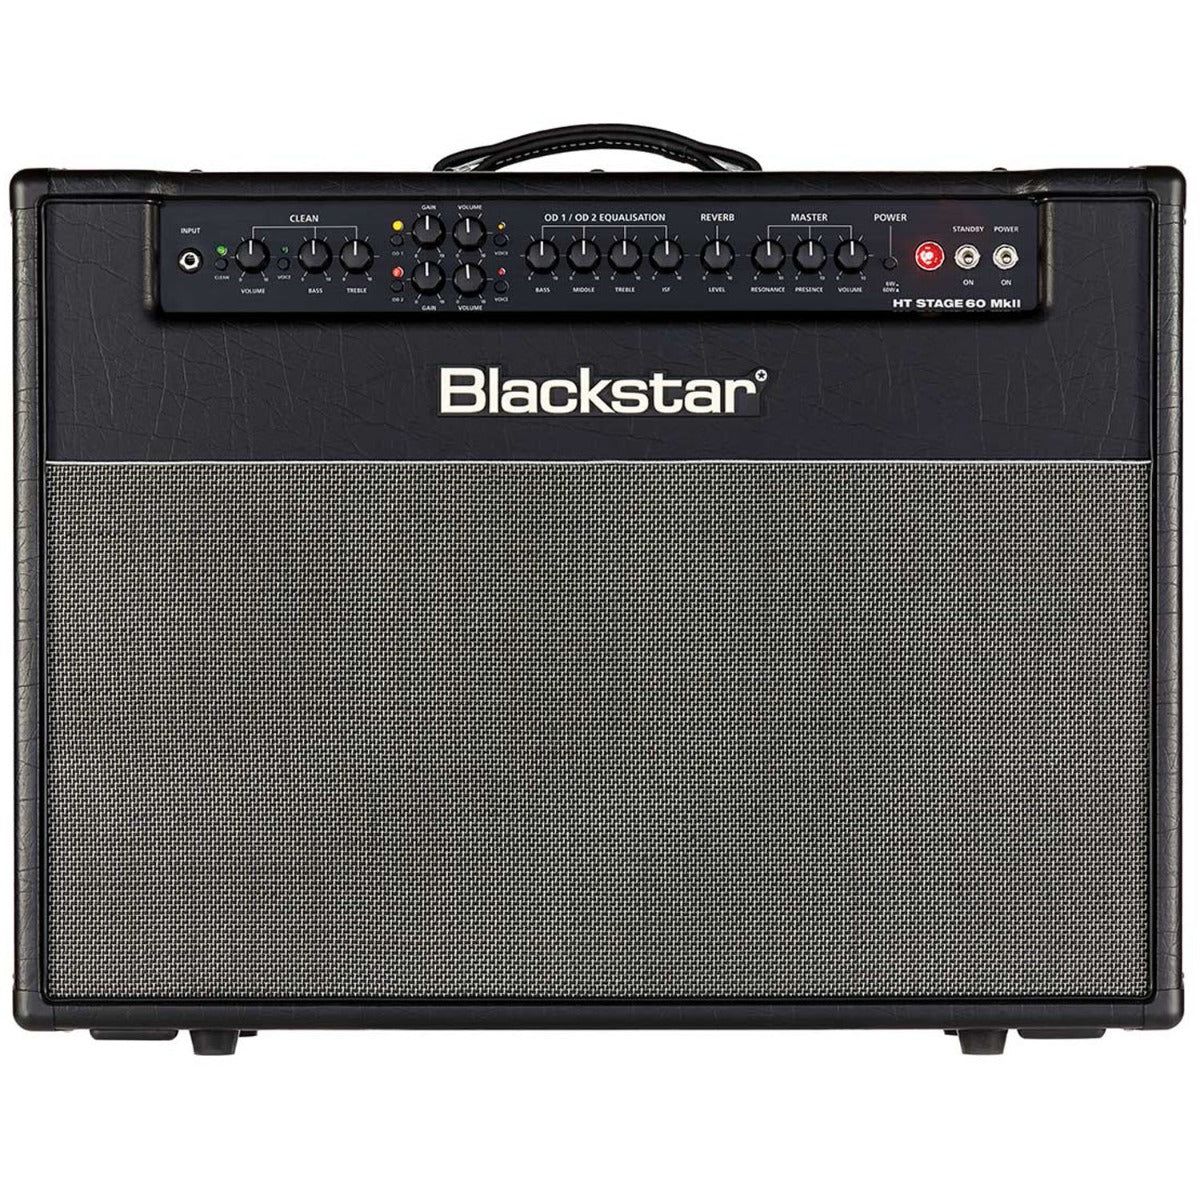 Blackstar HT Stage 60 212 MKII